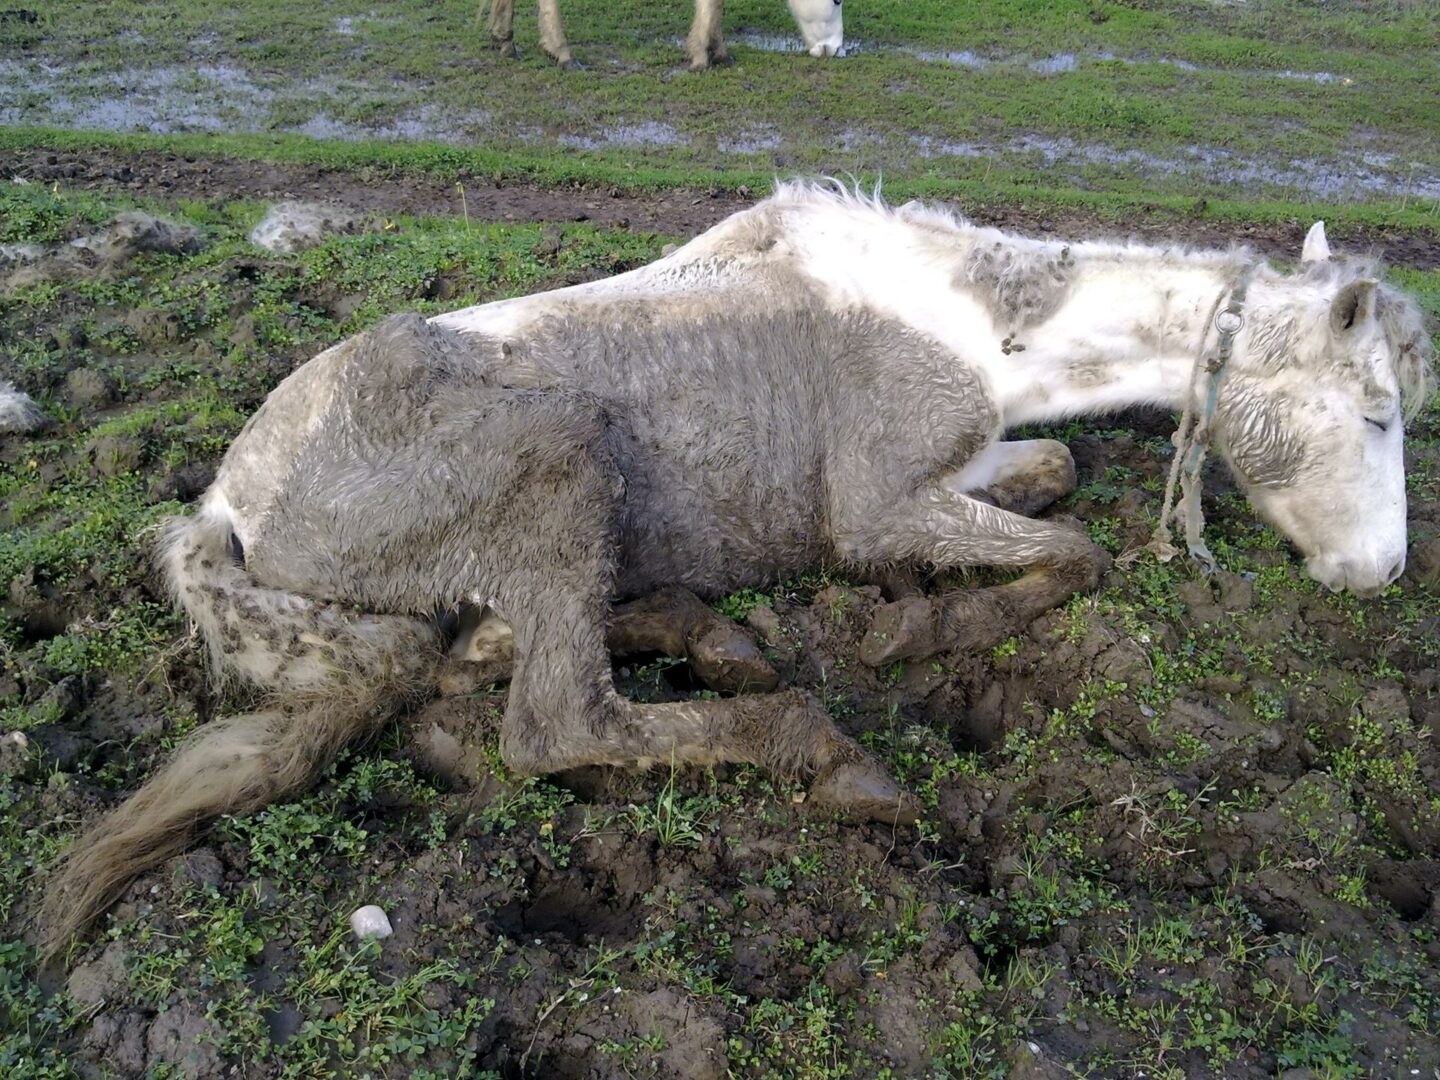 Arrestan a dueño de caballos rescatados en grave estado de desnutrición en Florida